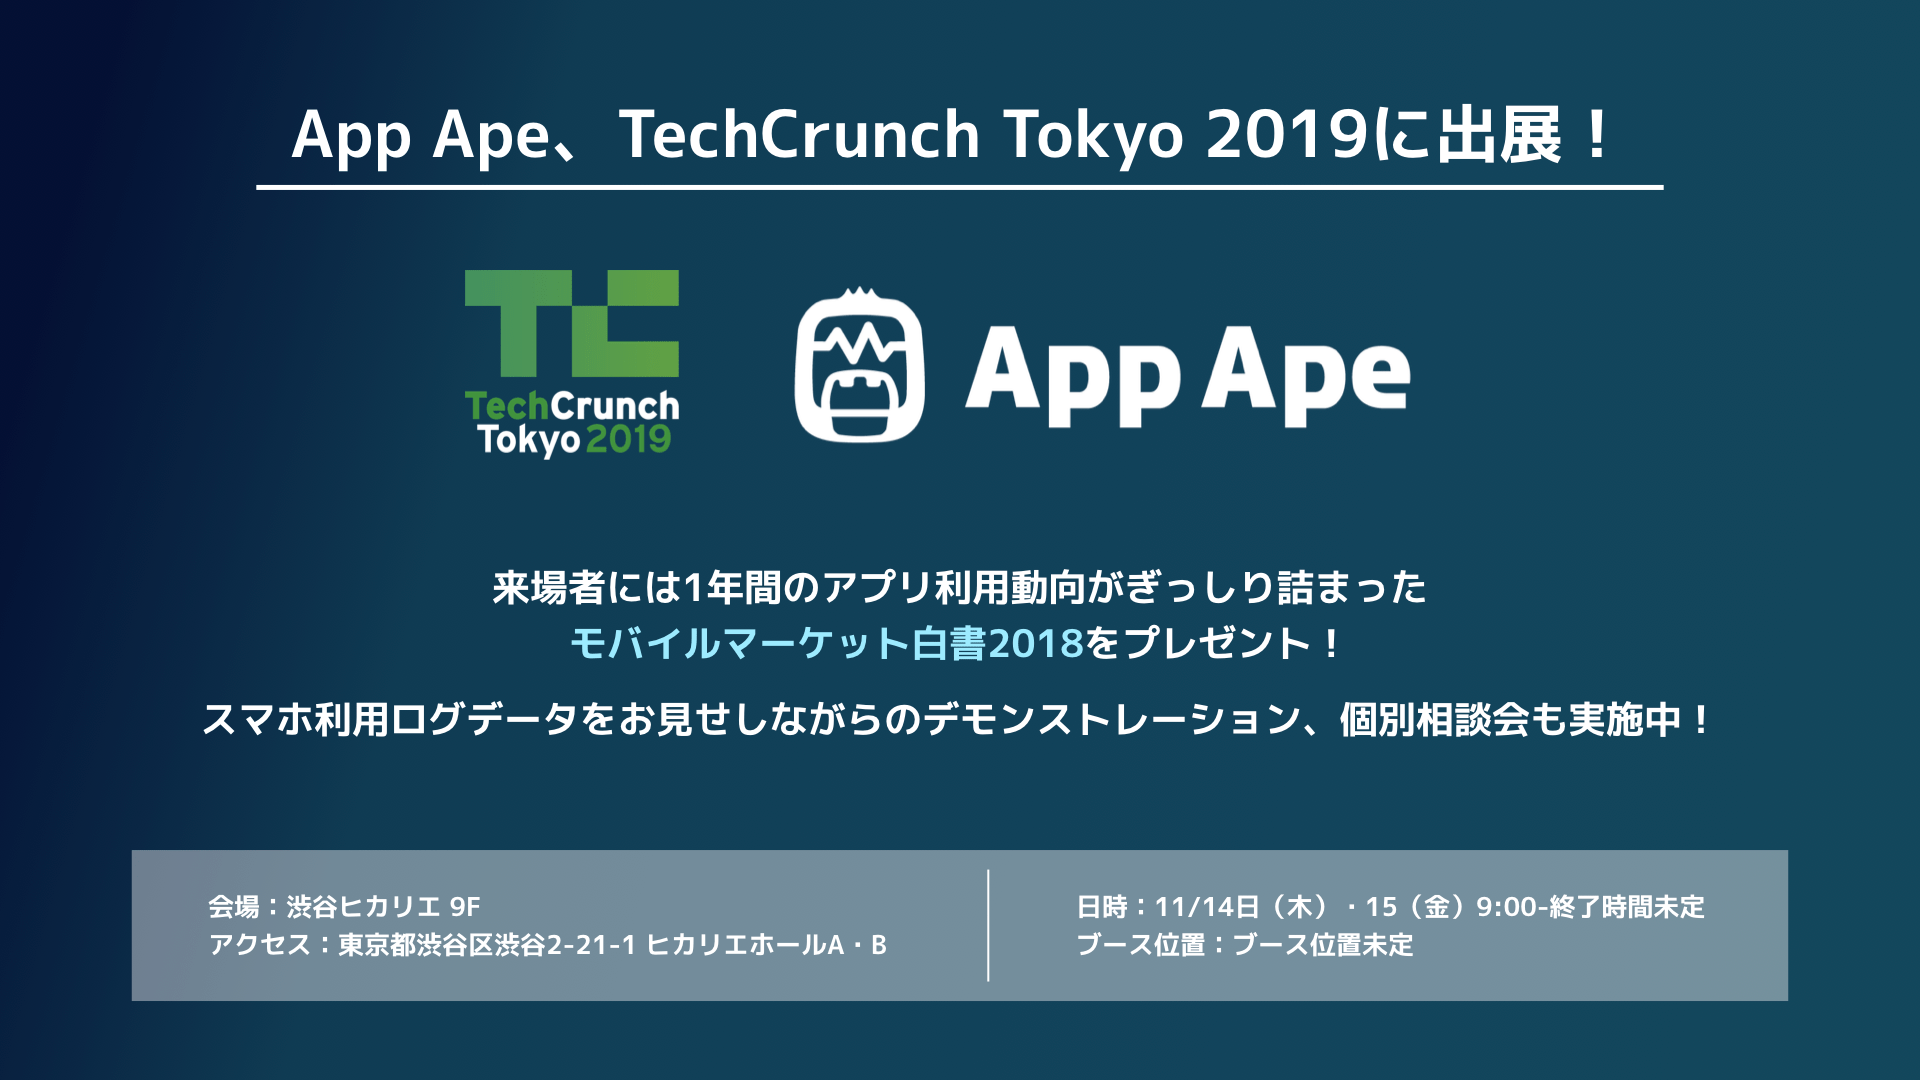 App Ape、TechCrunch Tokyo 2019に出展